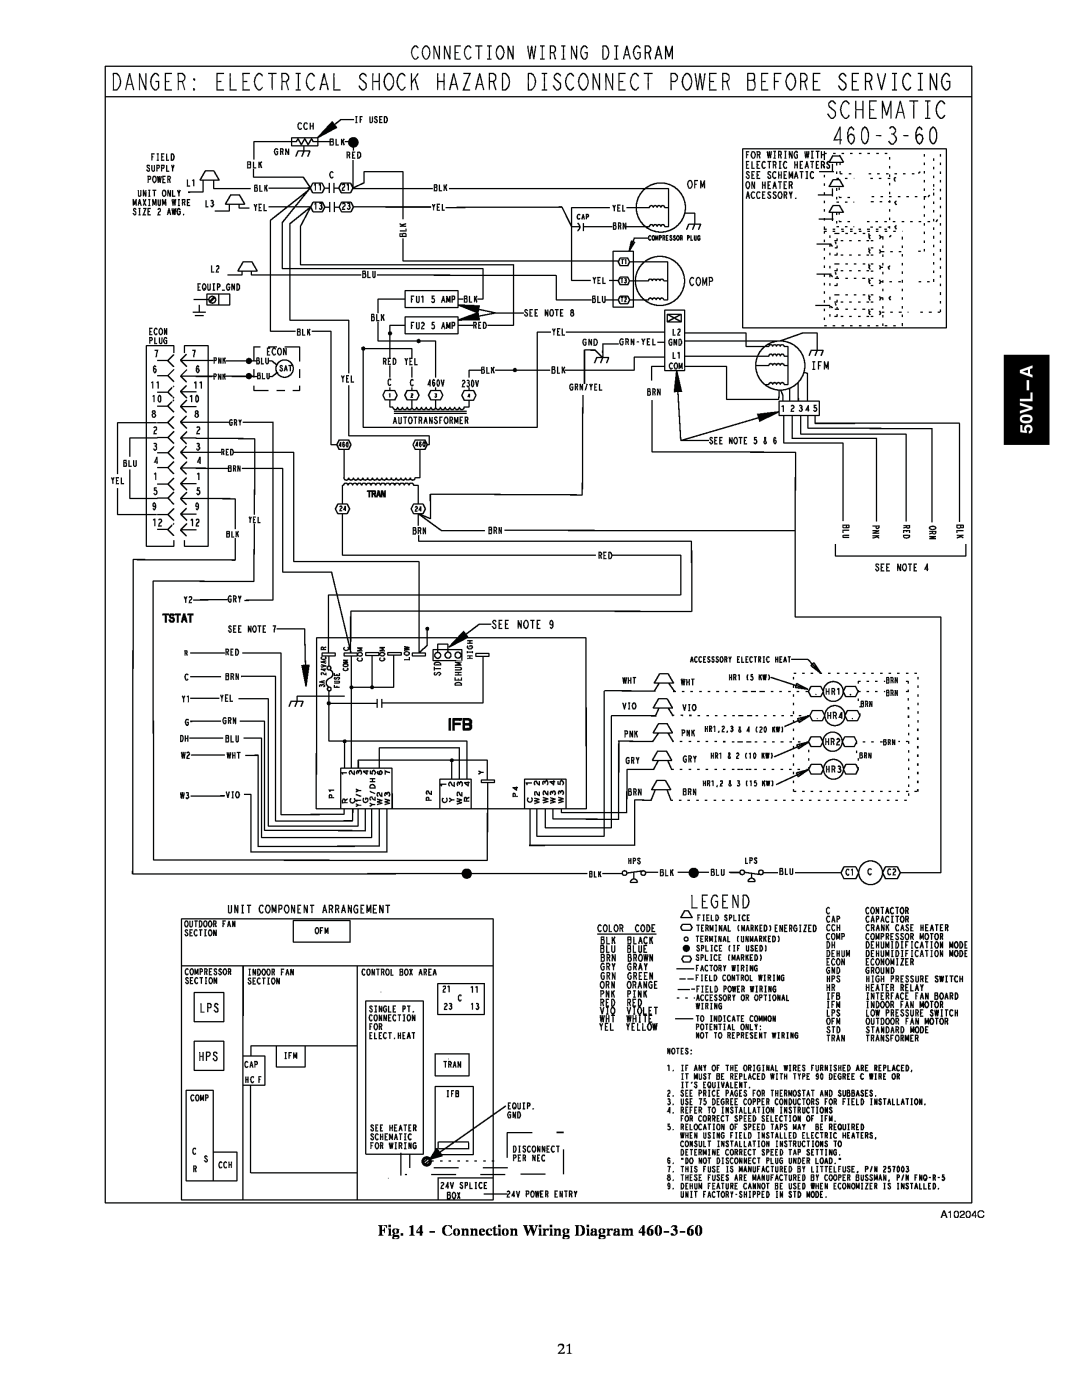 Carrier 50VL---A installation instructions Connection Wiring Diagram, A10204C, HR1 HR4 HR2 HR3 C, SATA --50VL C 